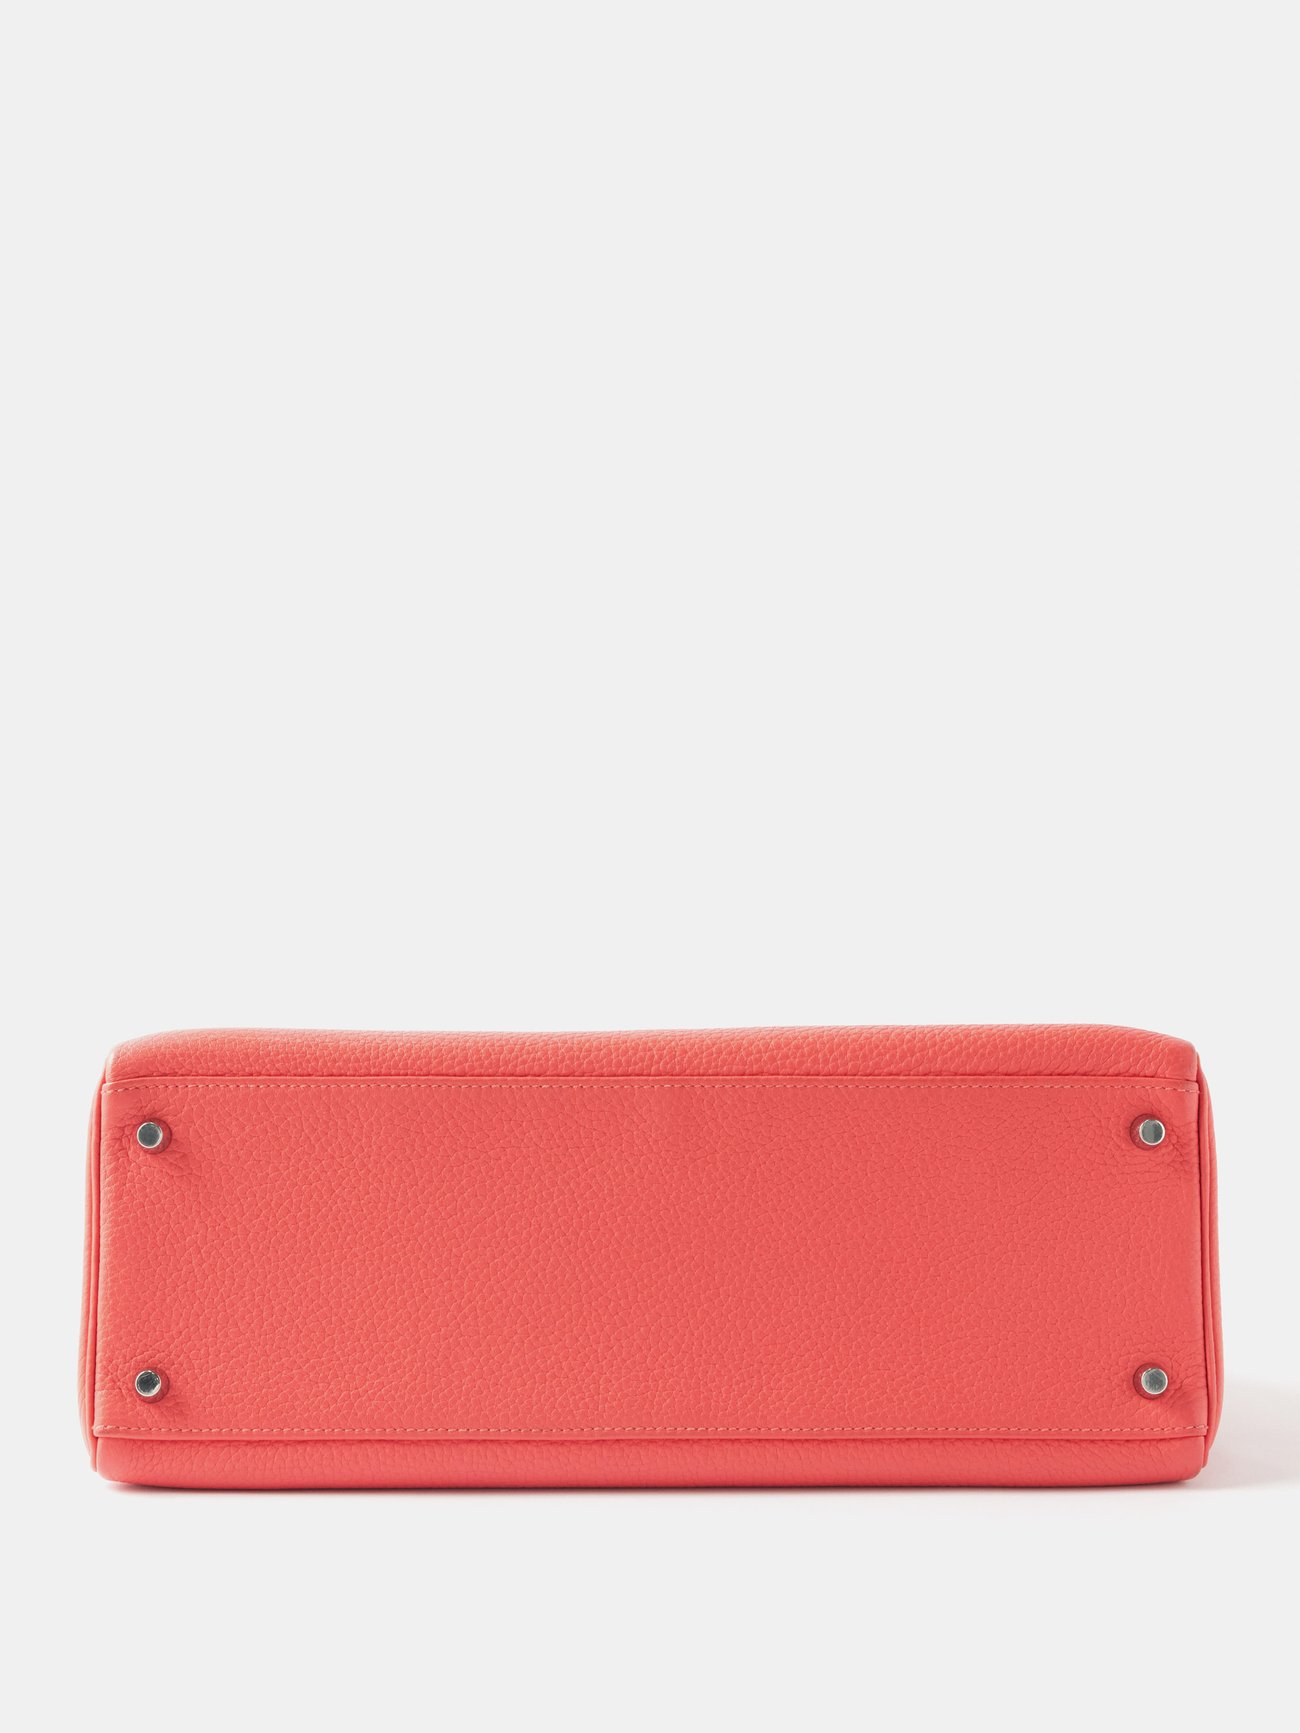 Pink Hermès Kelly 35cm handbag, MATCHES x Sellier